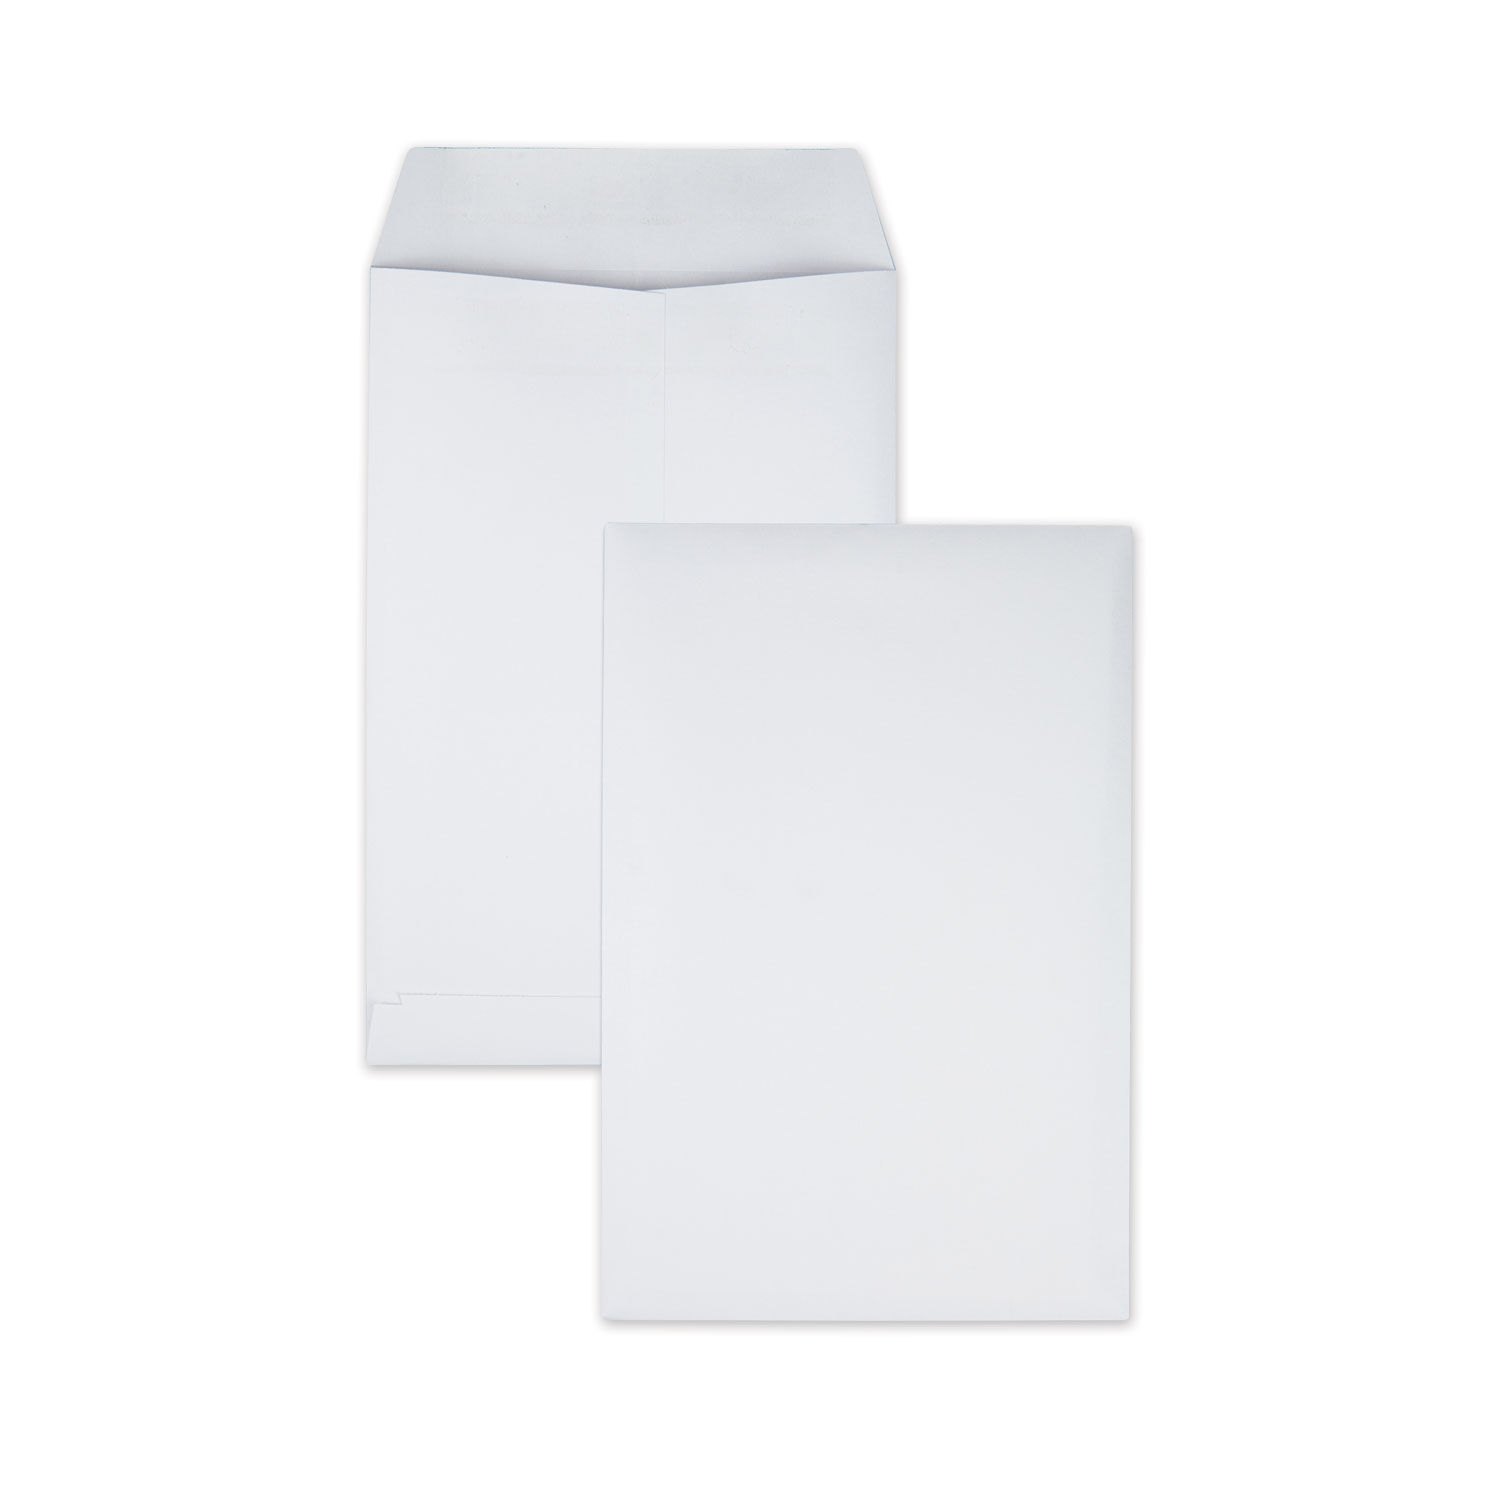 Redi-Seal Catalog Envelope #1, Cheese Blade Flap, Redi-Seal Adhesive Closure, 6 x 9, White, 100/Box